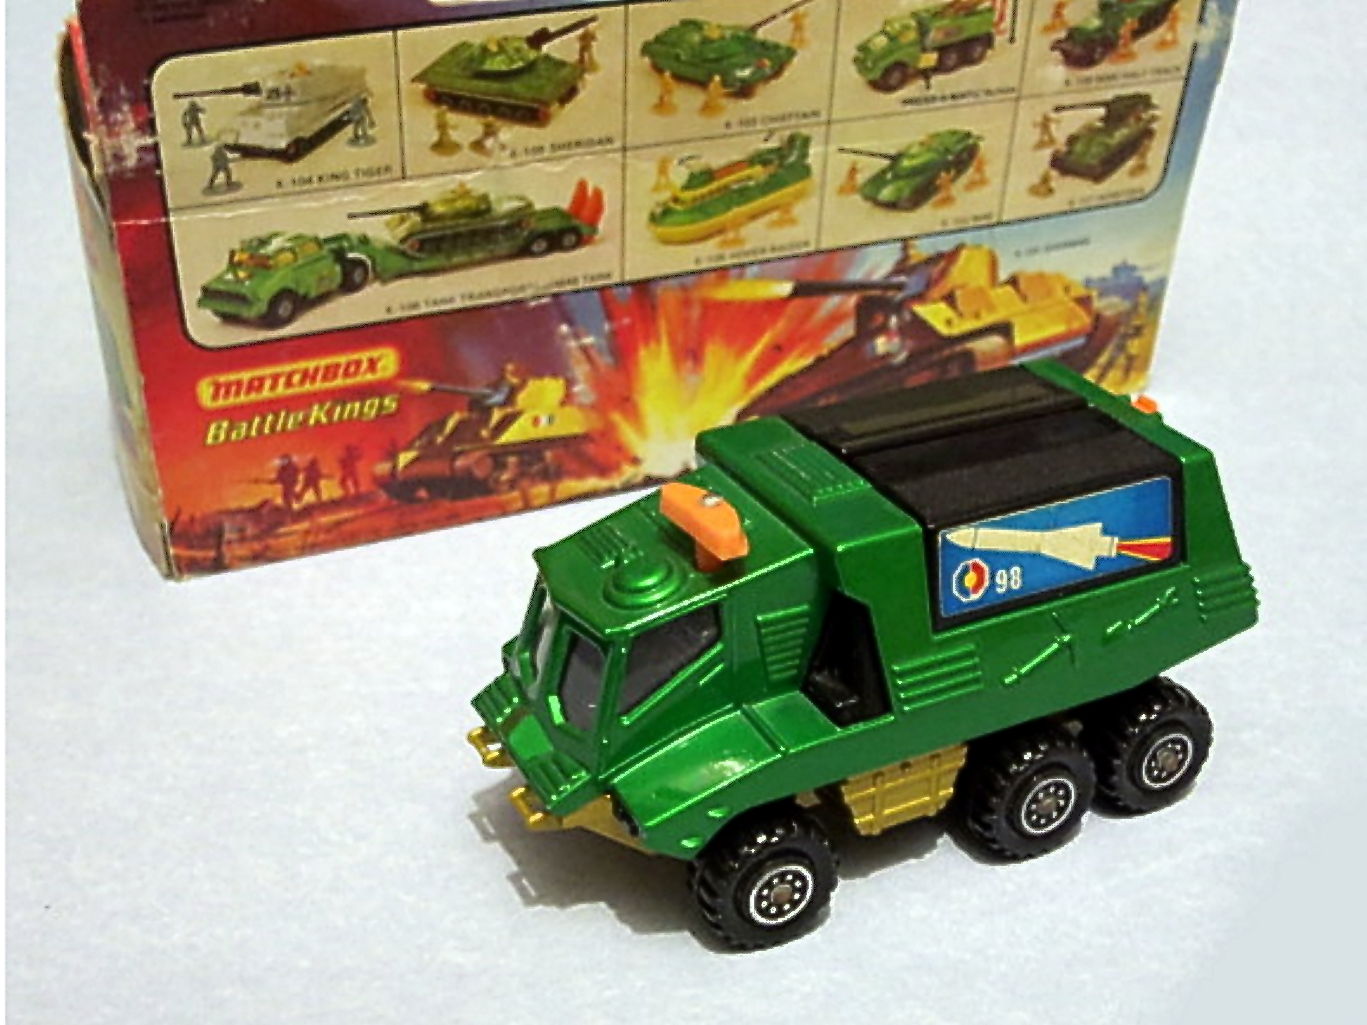 Missile Launcher (K-111) | Matchbox Cars Wiki | Fandom